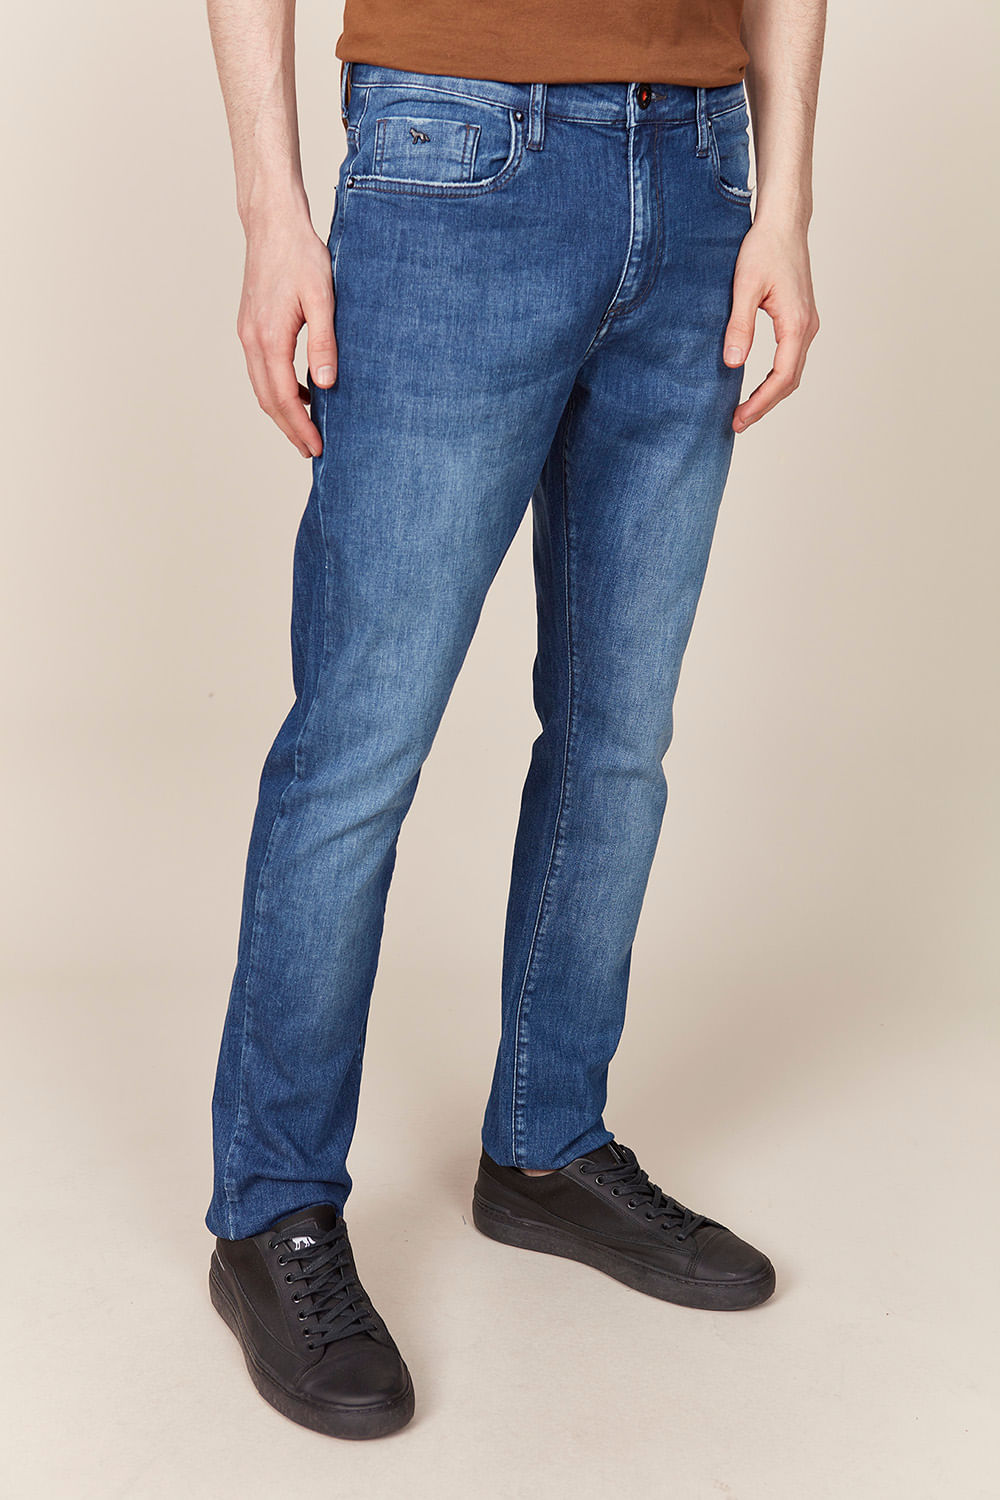 Calça Jeans Masculina Skinny Azul Acostamento